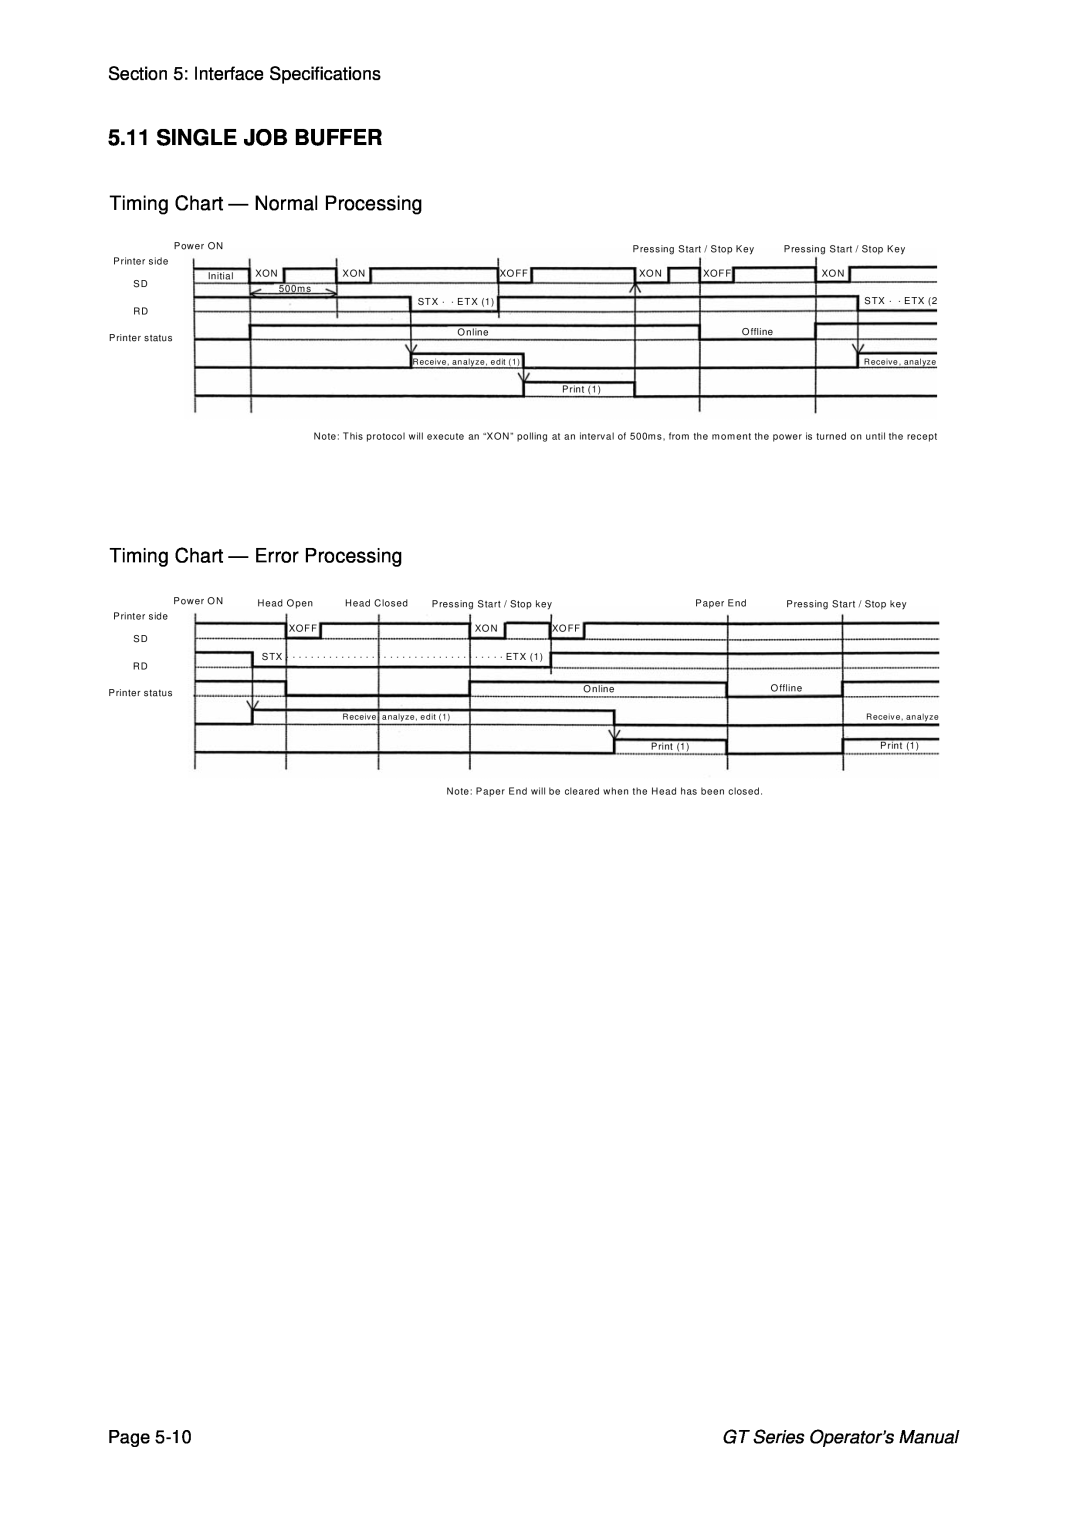 SATO GT424 manual Single Job Buffer, Timing Chart - Normal Processing, Timing Chart - Error Processing 